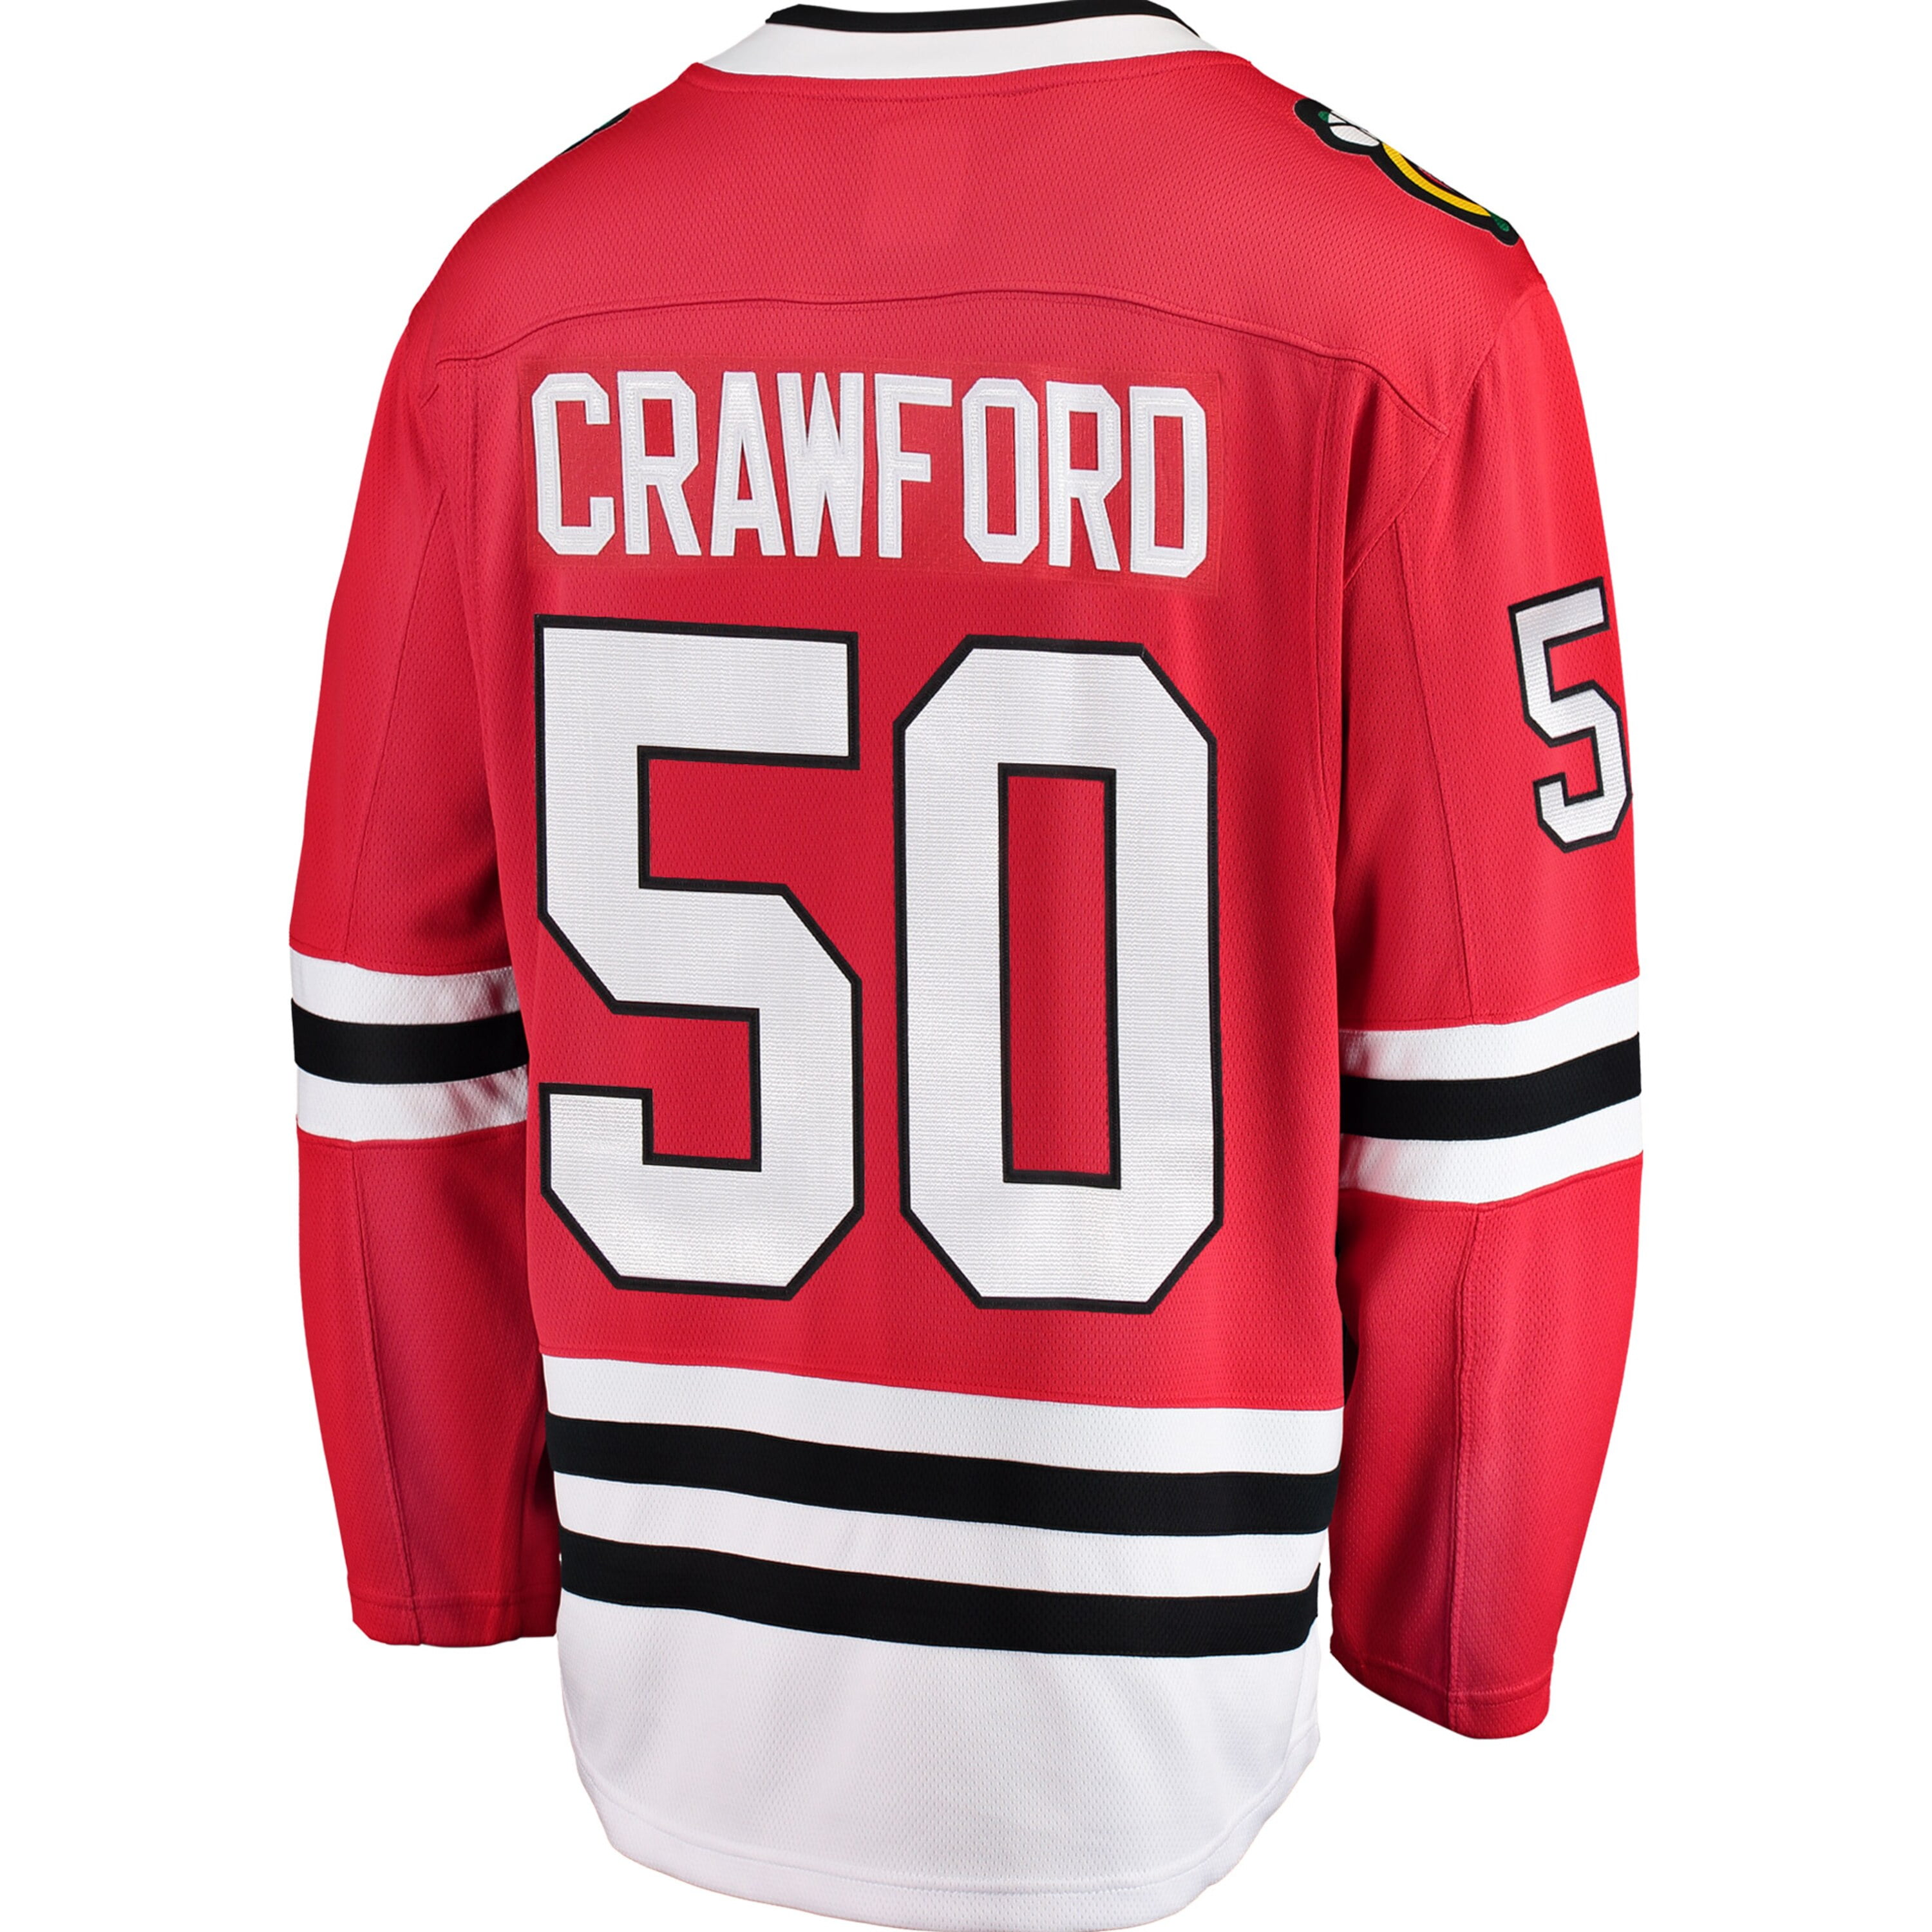 chicago blackhawks jersey crawford